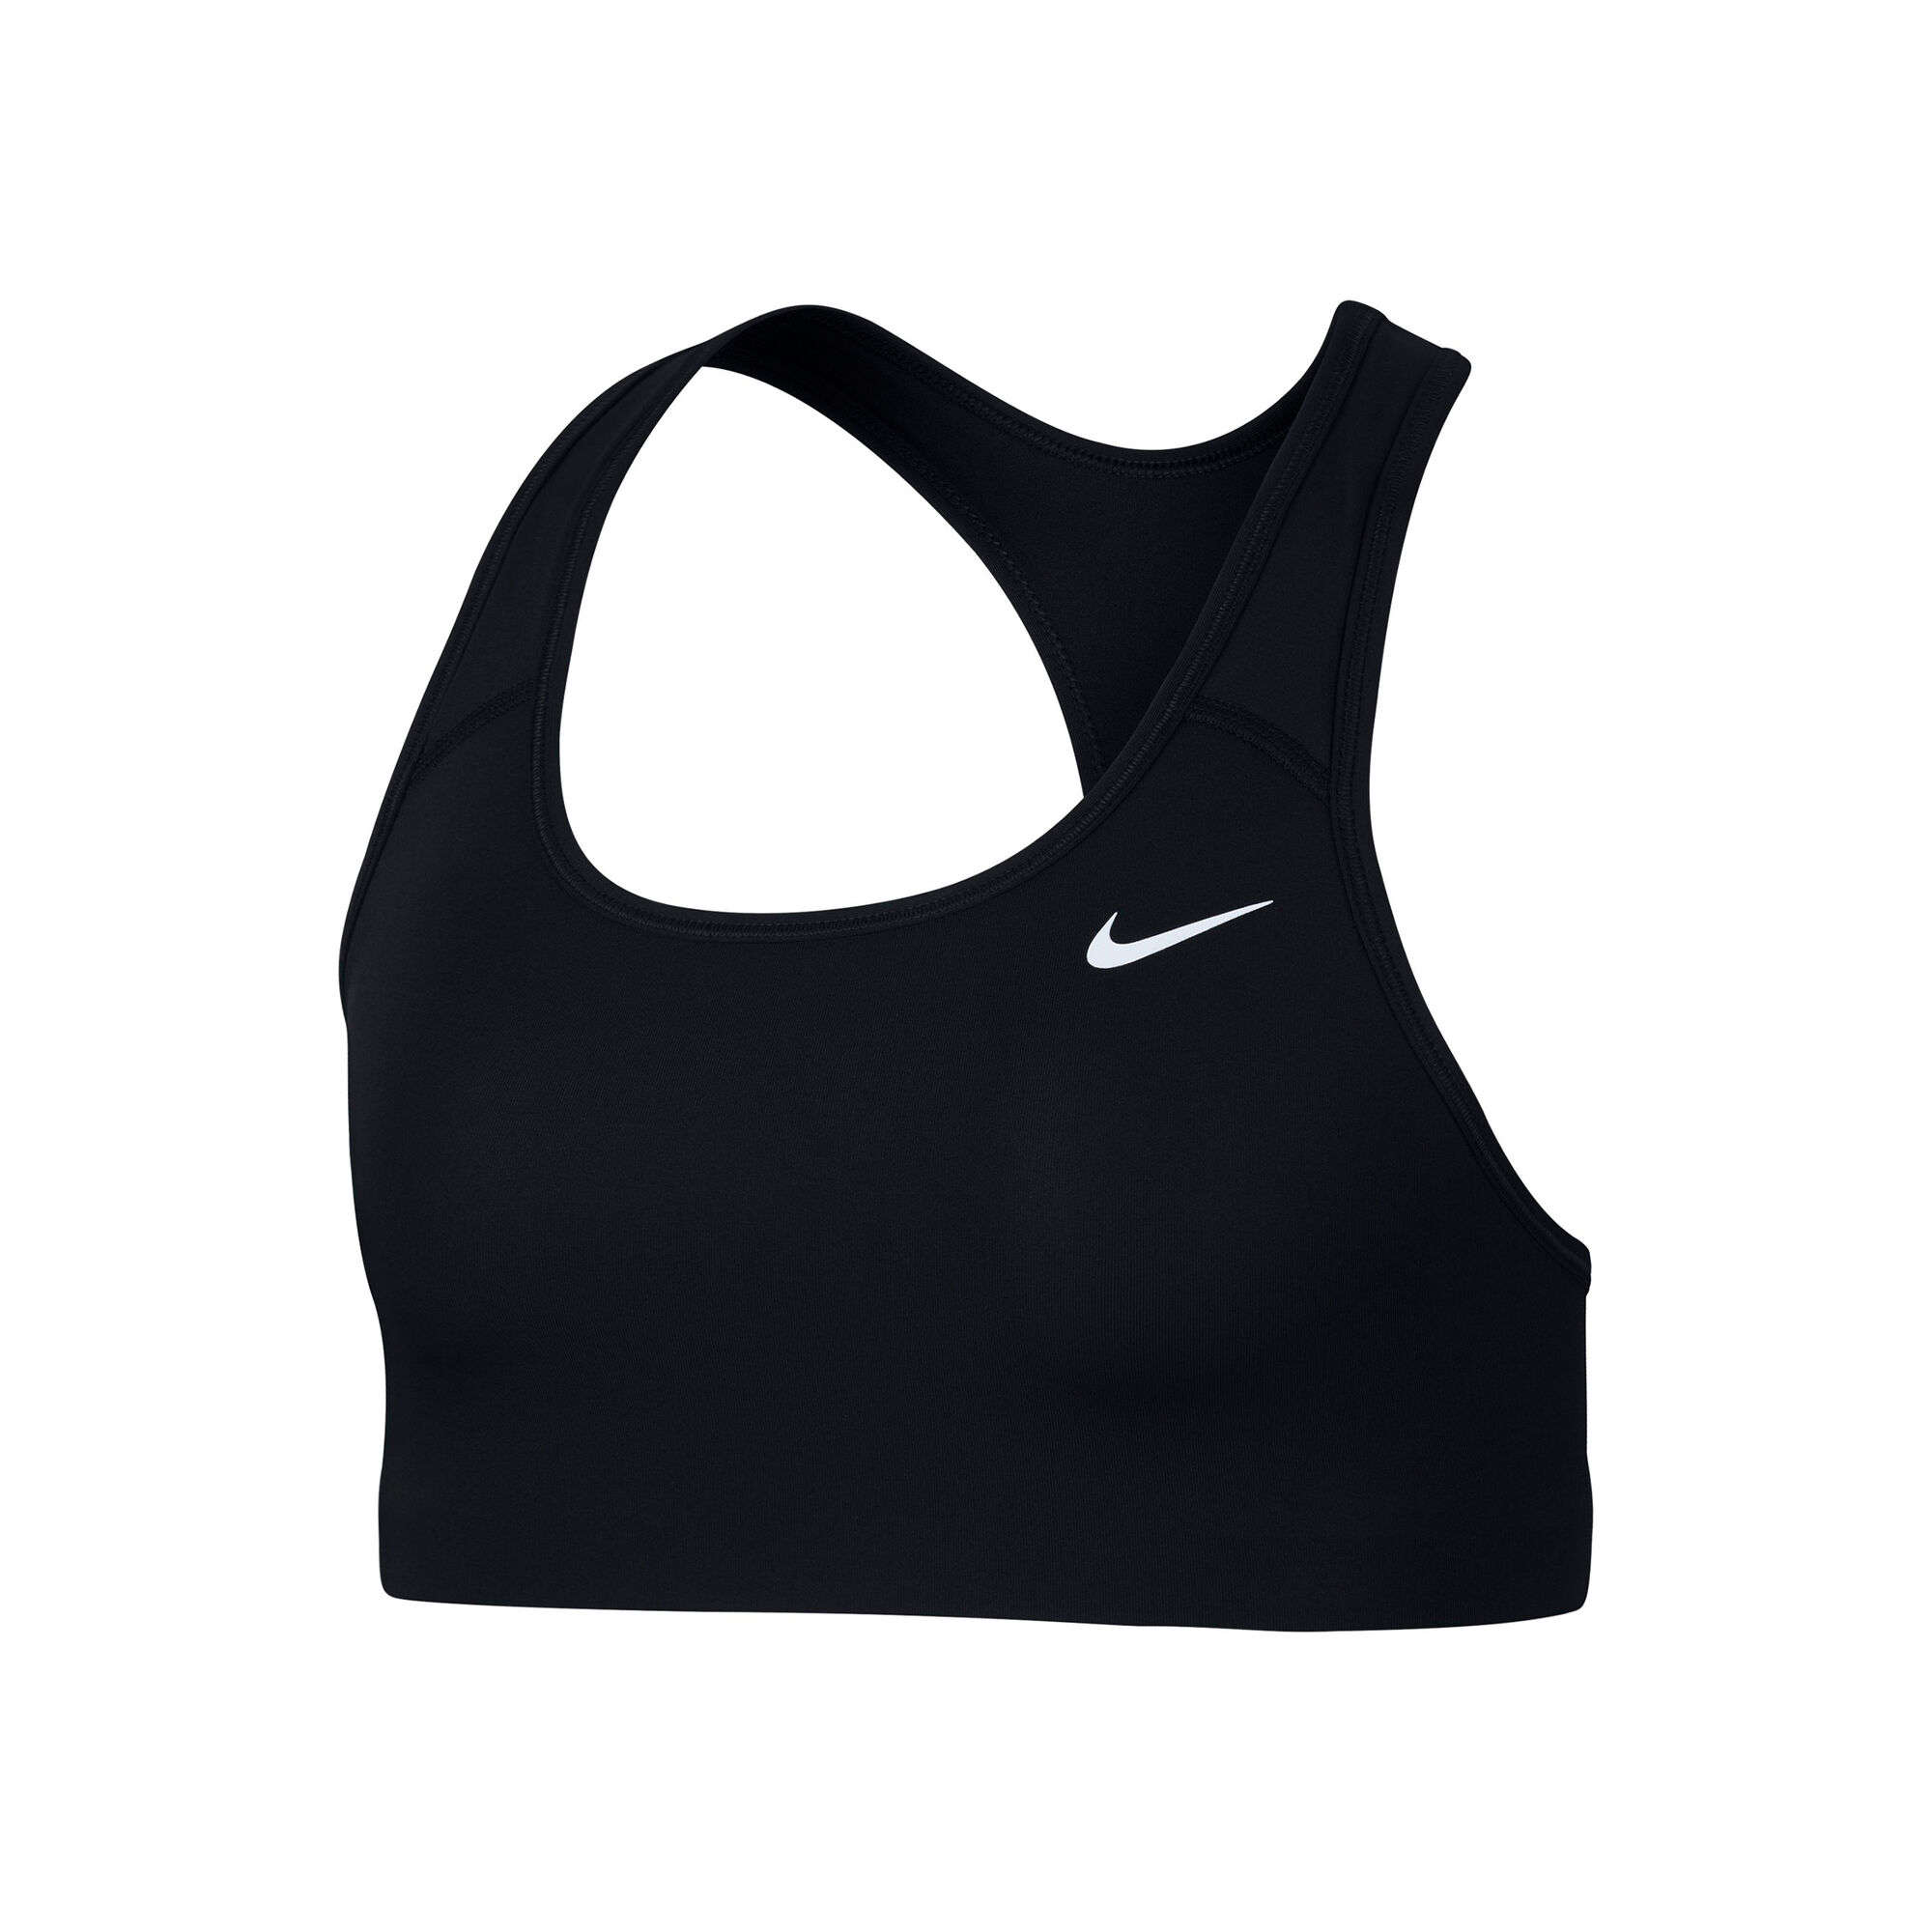 Nike Swoosh Girls' Black White Sports Bra